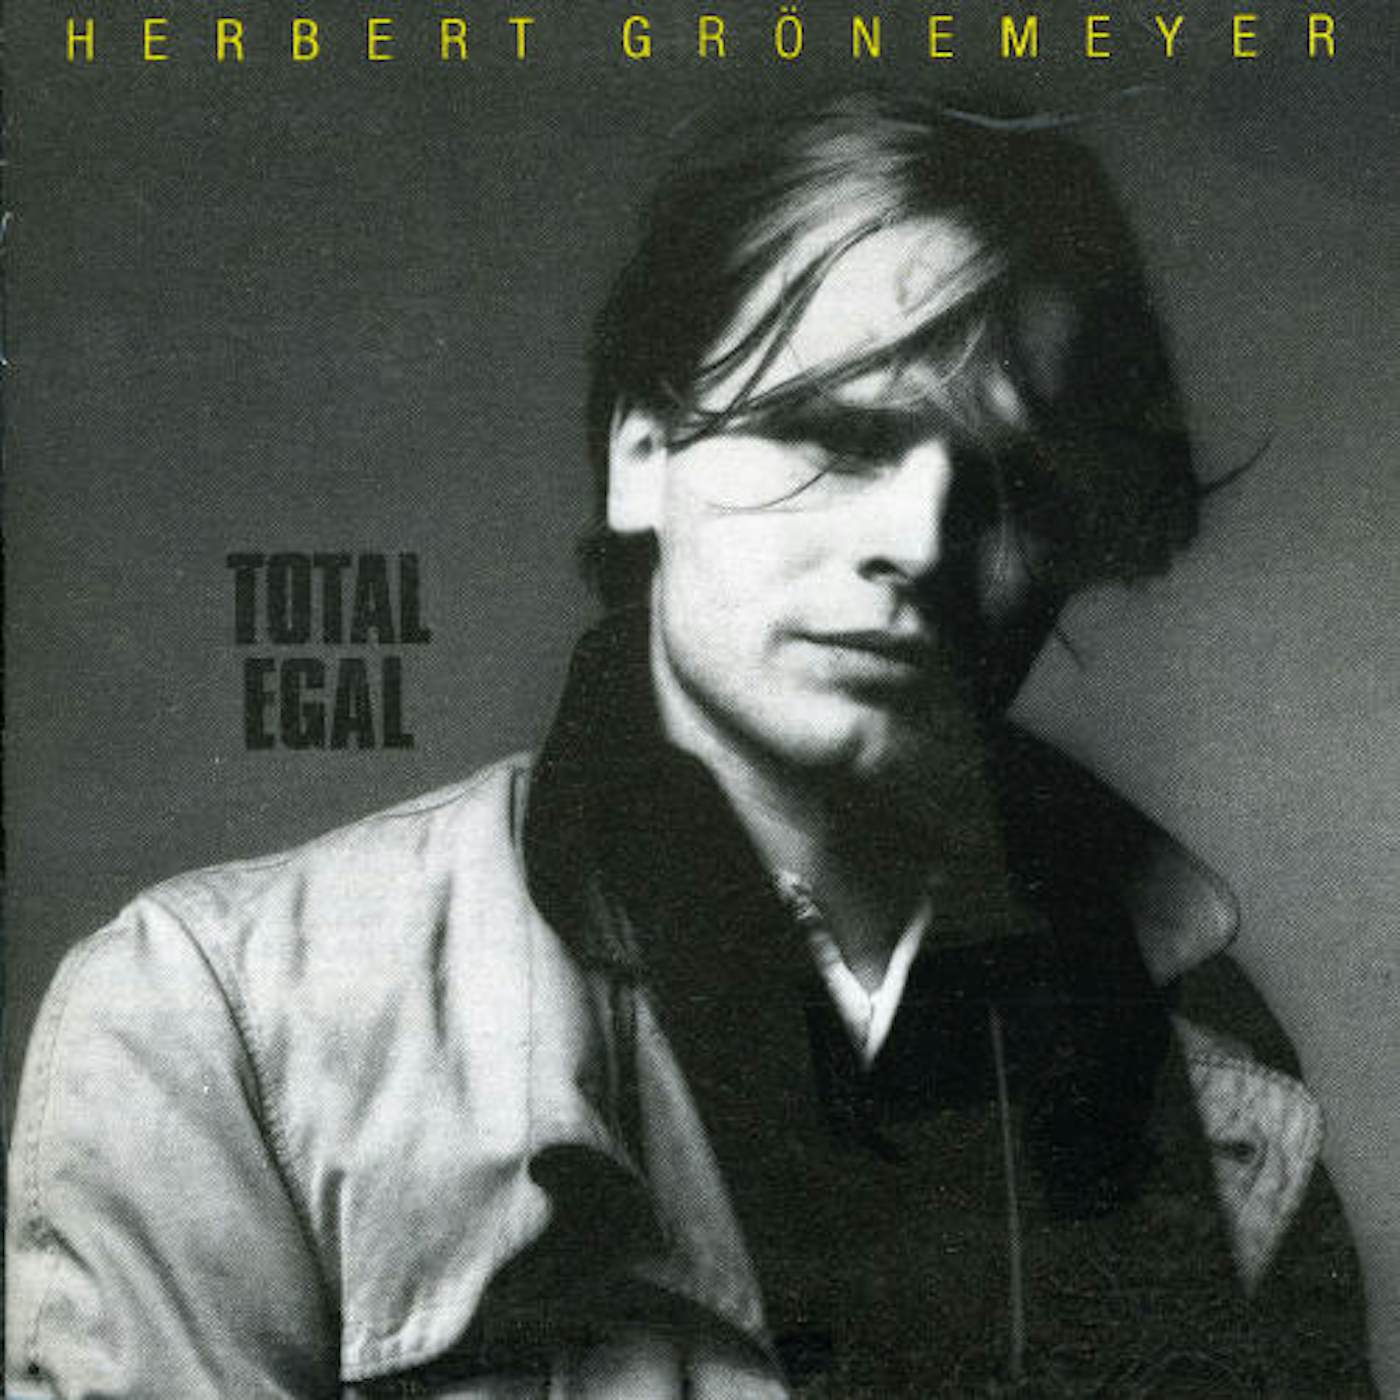 Herbert Grönemeyer TOTAL EGAL CD